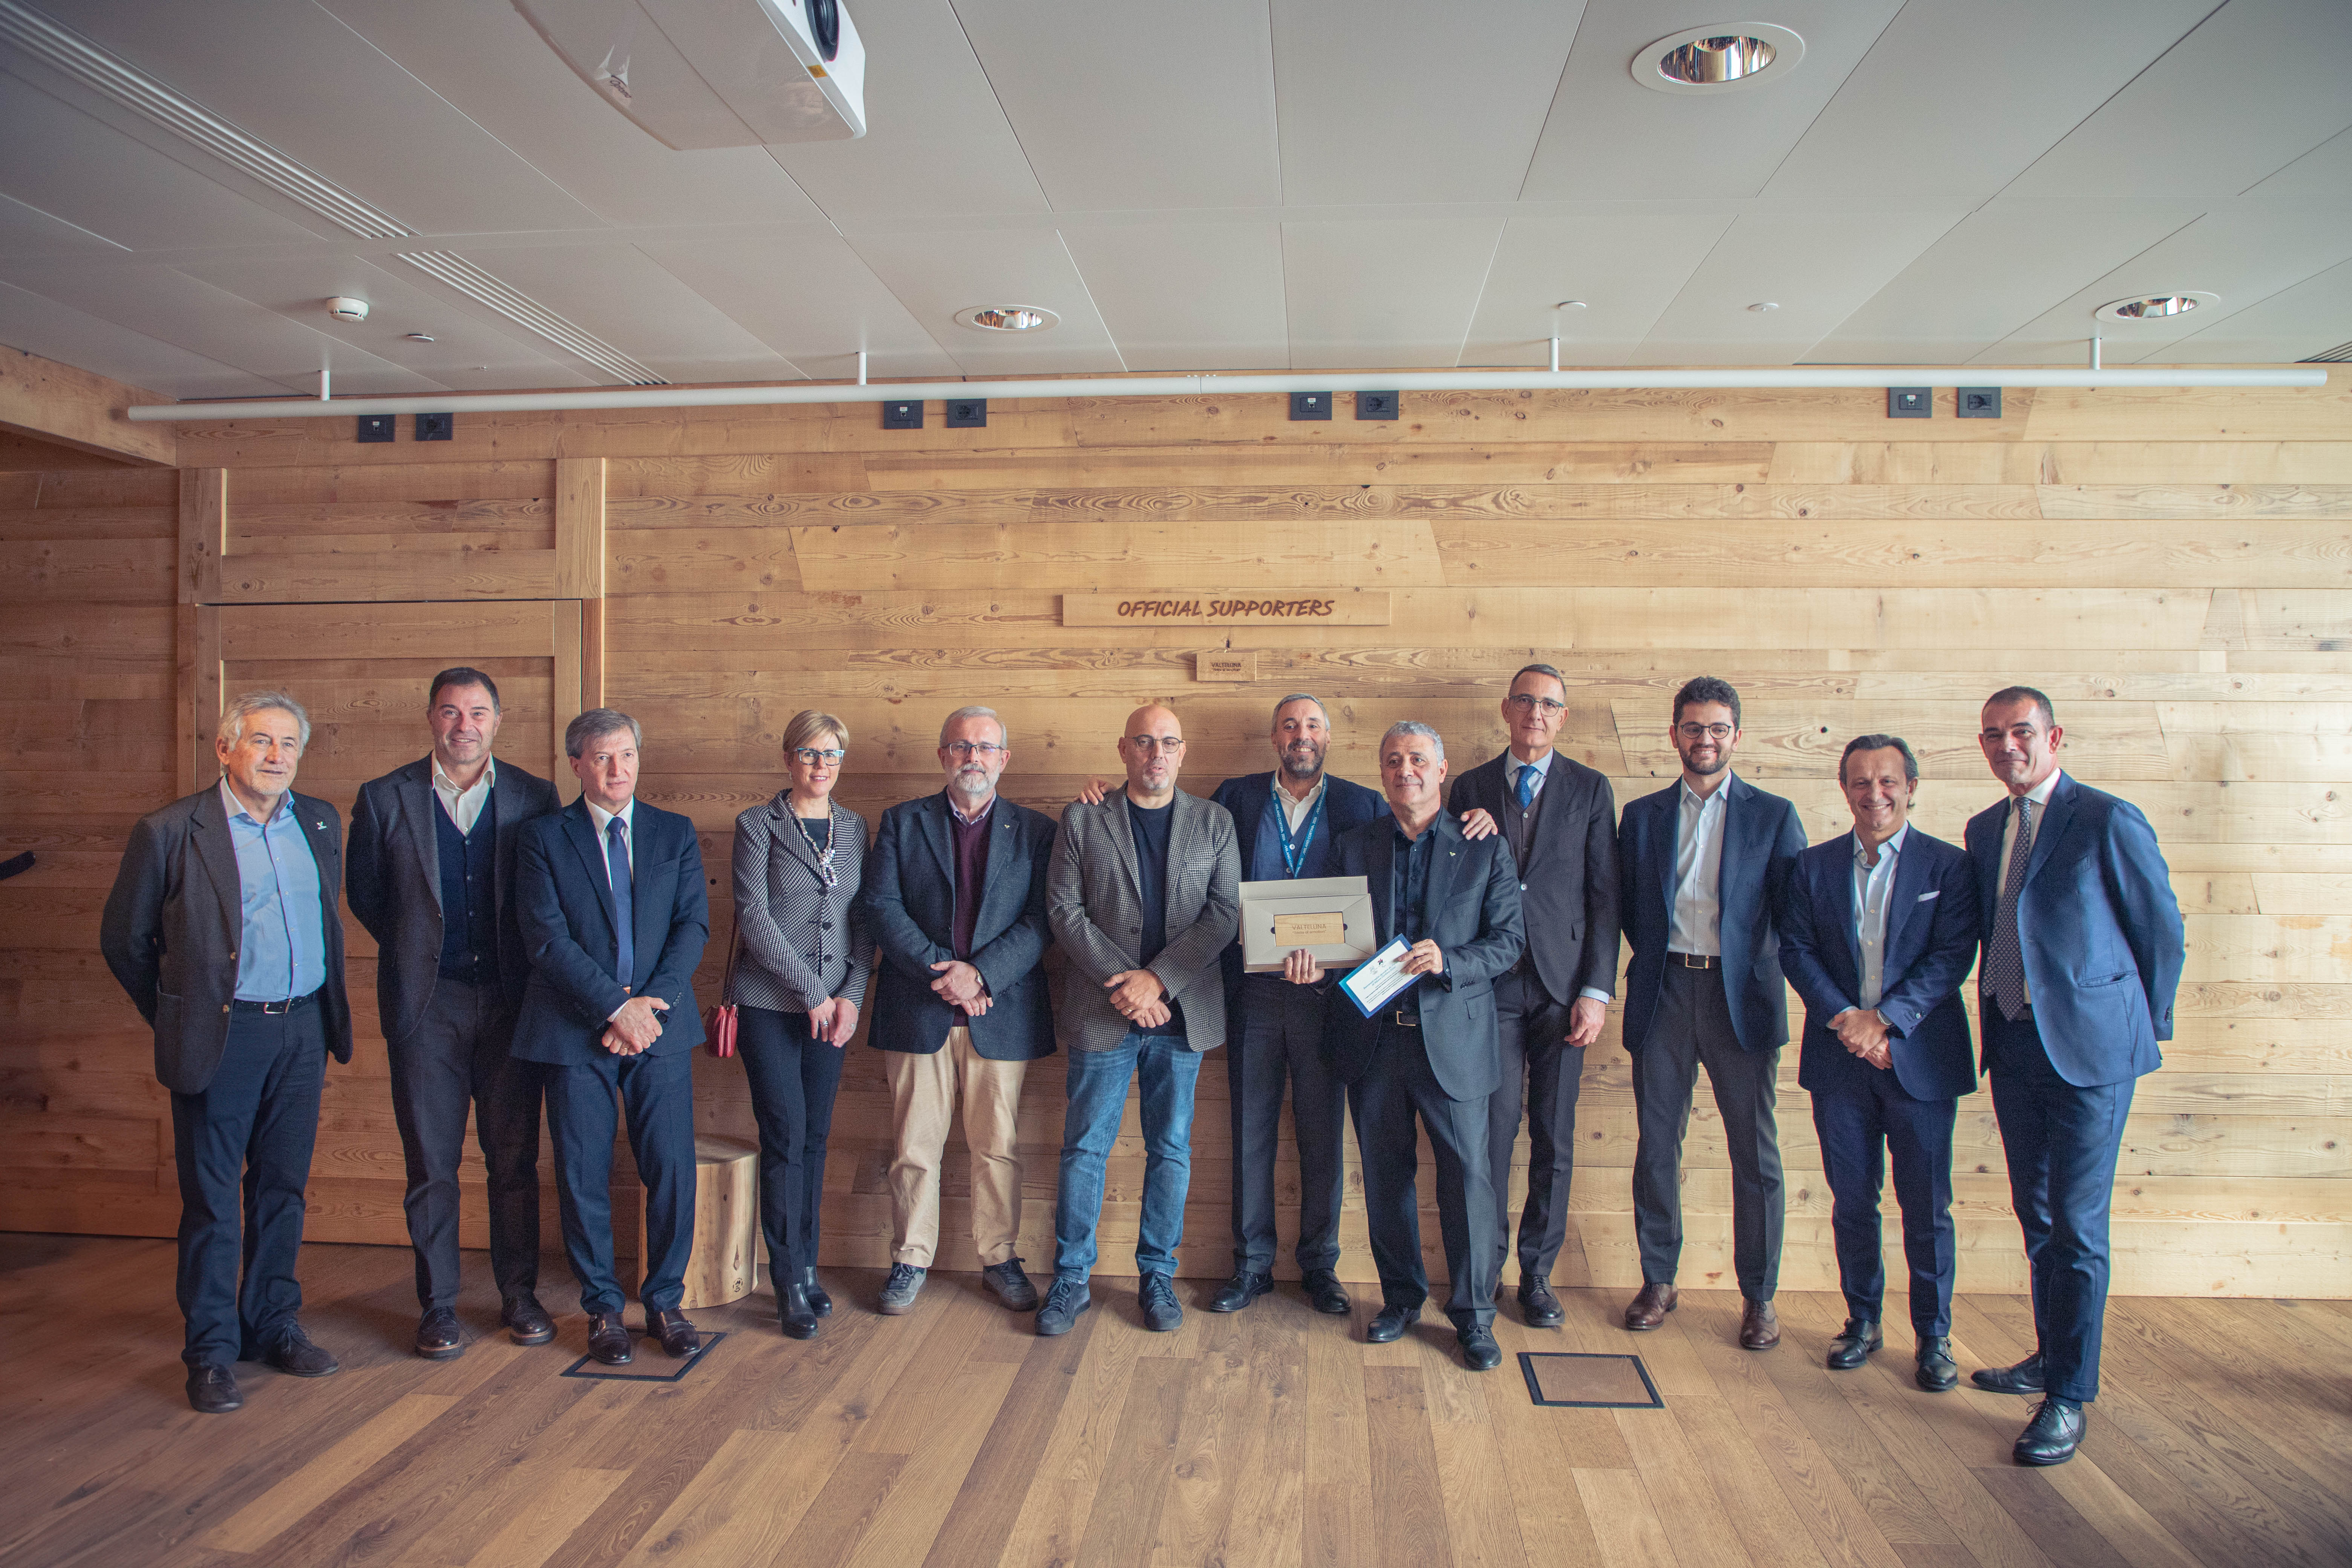 Group photo with key representatives of Milano Cortina 2026 and the Valtellina consortium